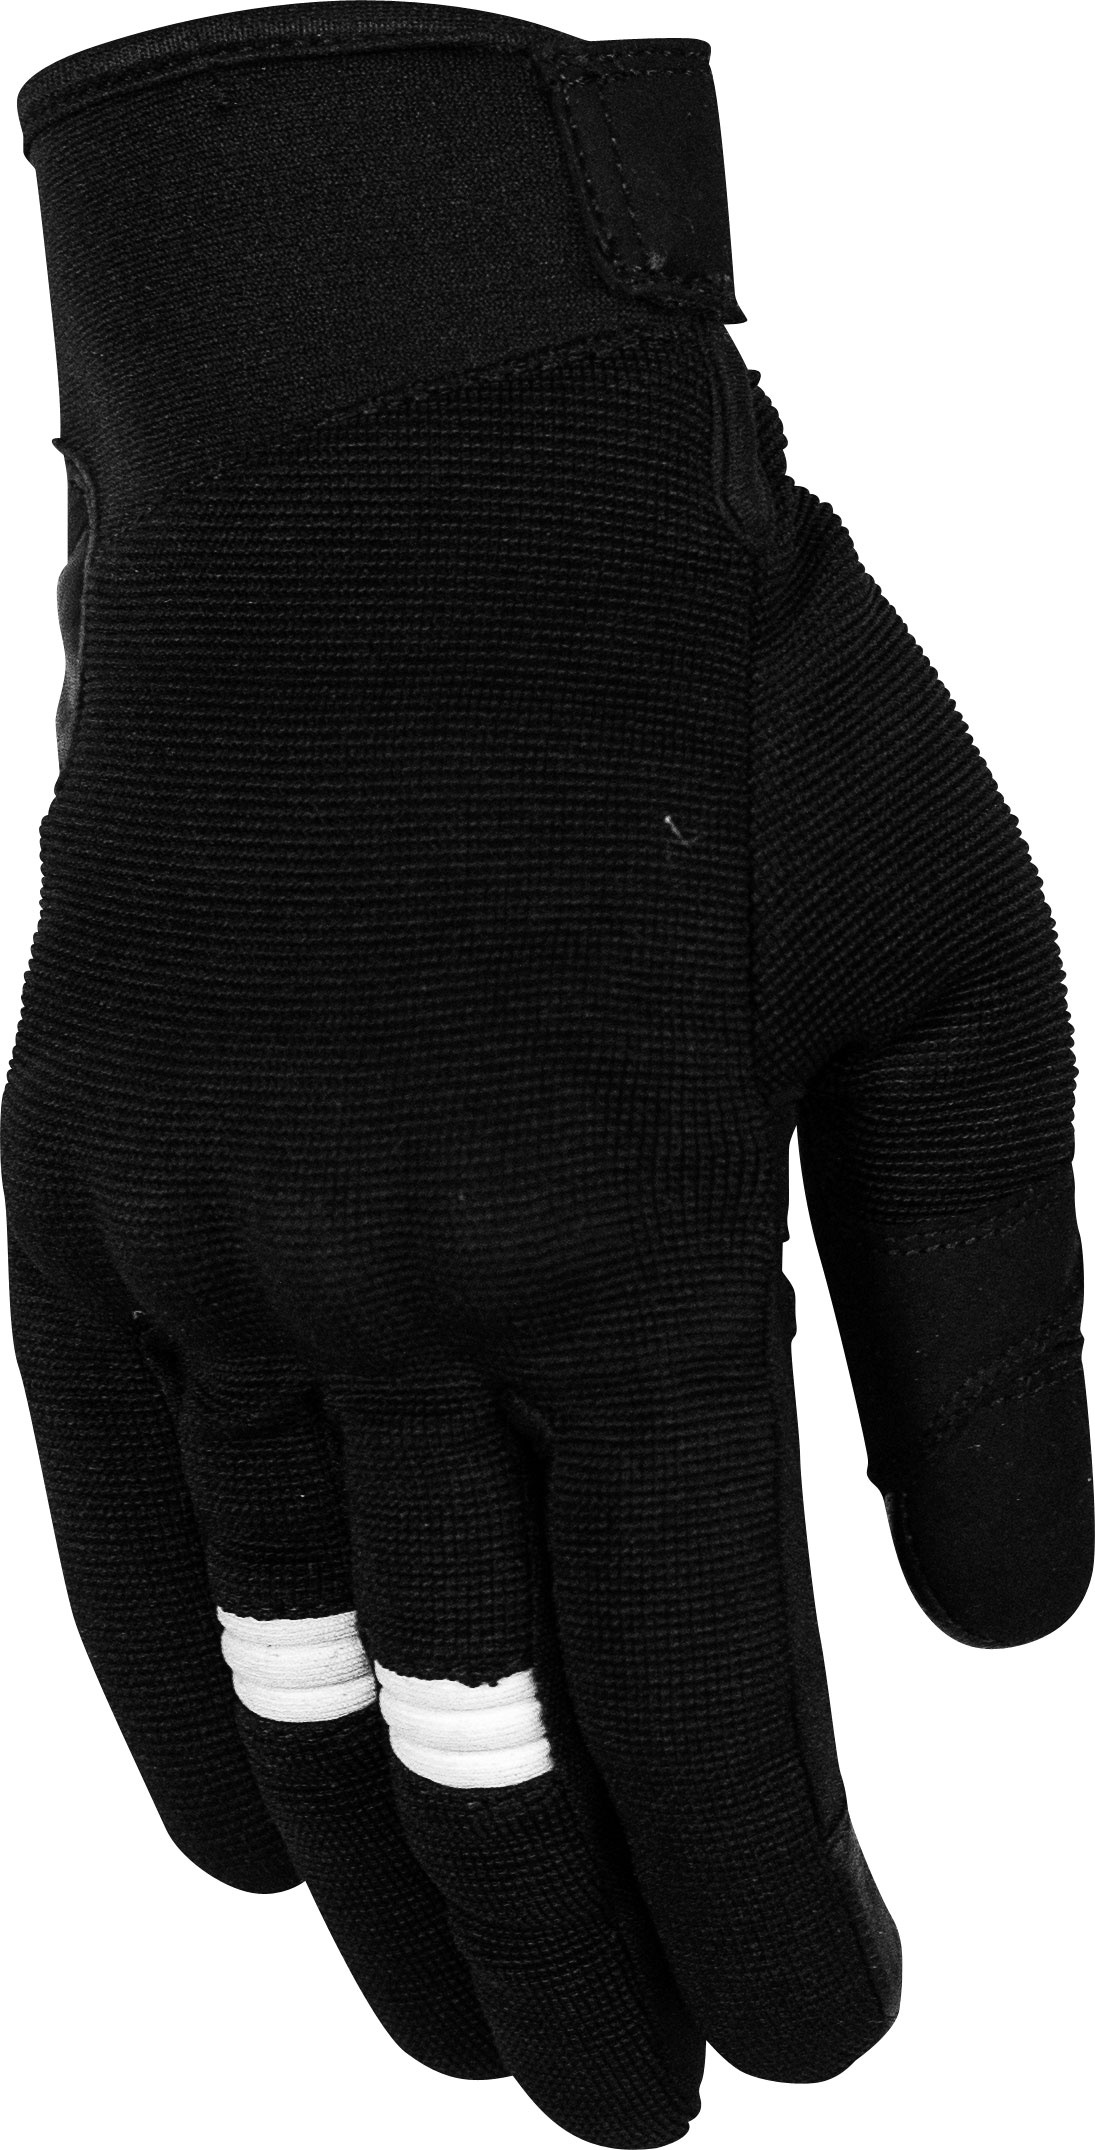 Rusty Stitches Bonnie V2, gants femmes - Noir/Blanc - XXL